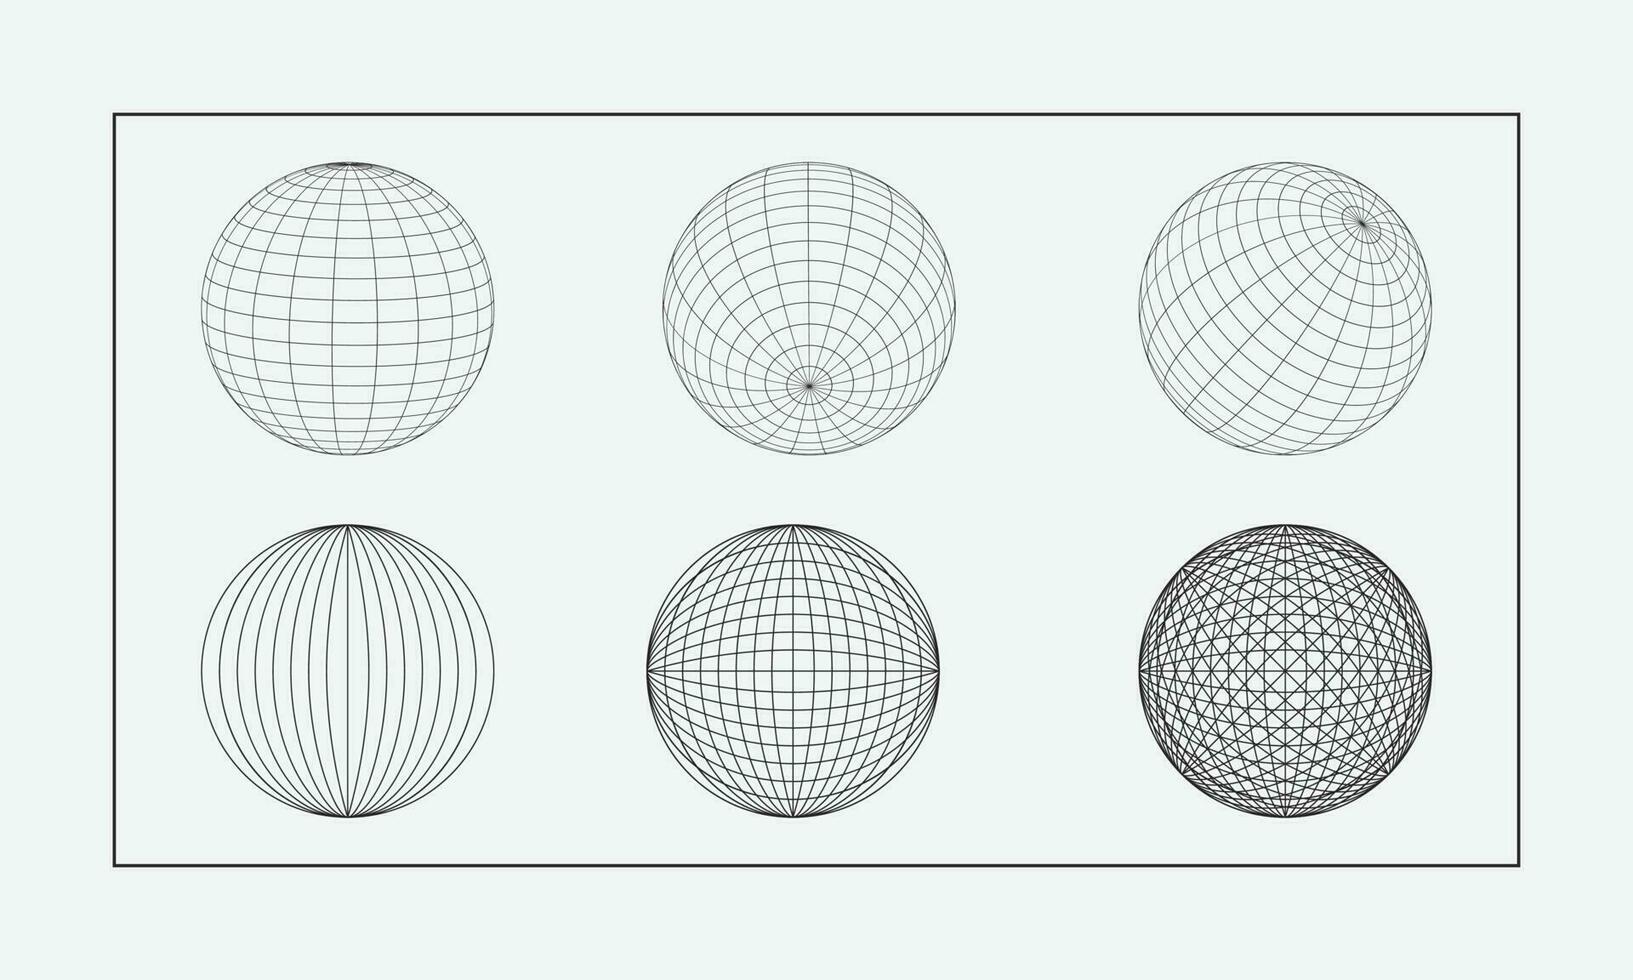 3d Drahtmodell Kugel Sammlung. Globus oder Ball im Kreis Netz Kabel. retro futuristisch ästhetisch. Geometrie Drahtmodell Formen Netz. Cyberpunk Elemente im modisch psychedelisch Rave Stil vektor